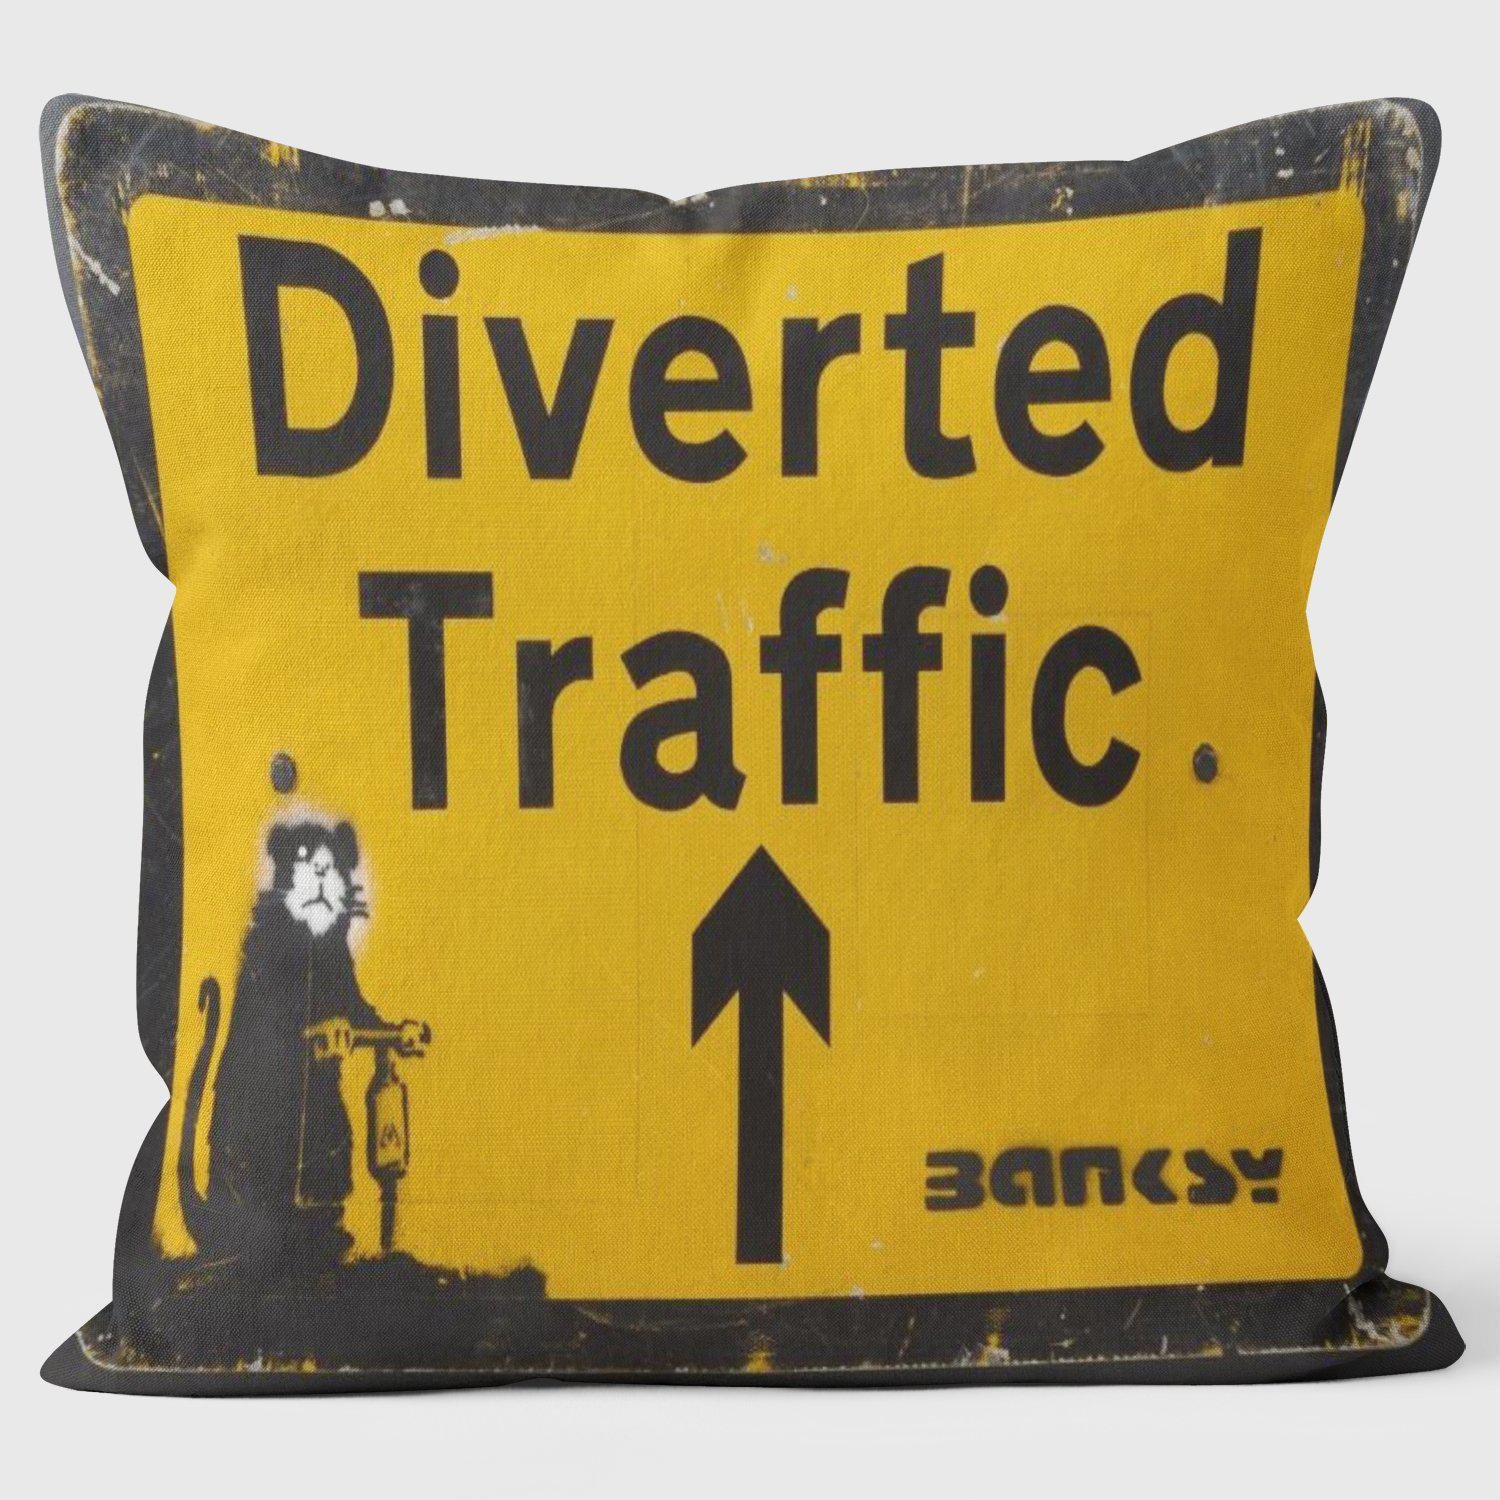 Diverted Traffic - Banksy Inspired - Graffiti Art Cushion - Handmade Cushions UK - WeLoveCushions